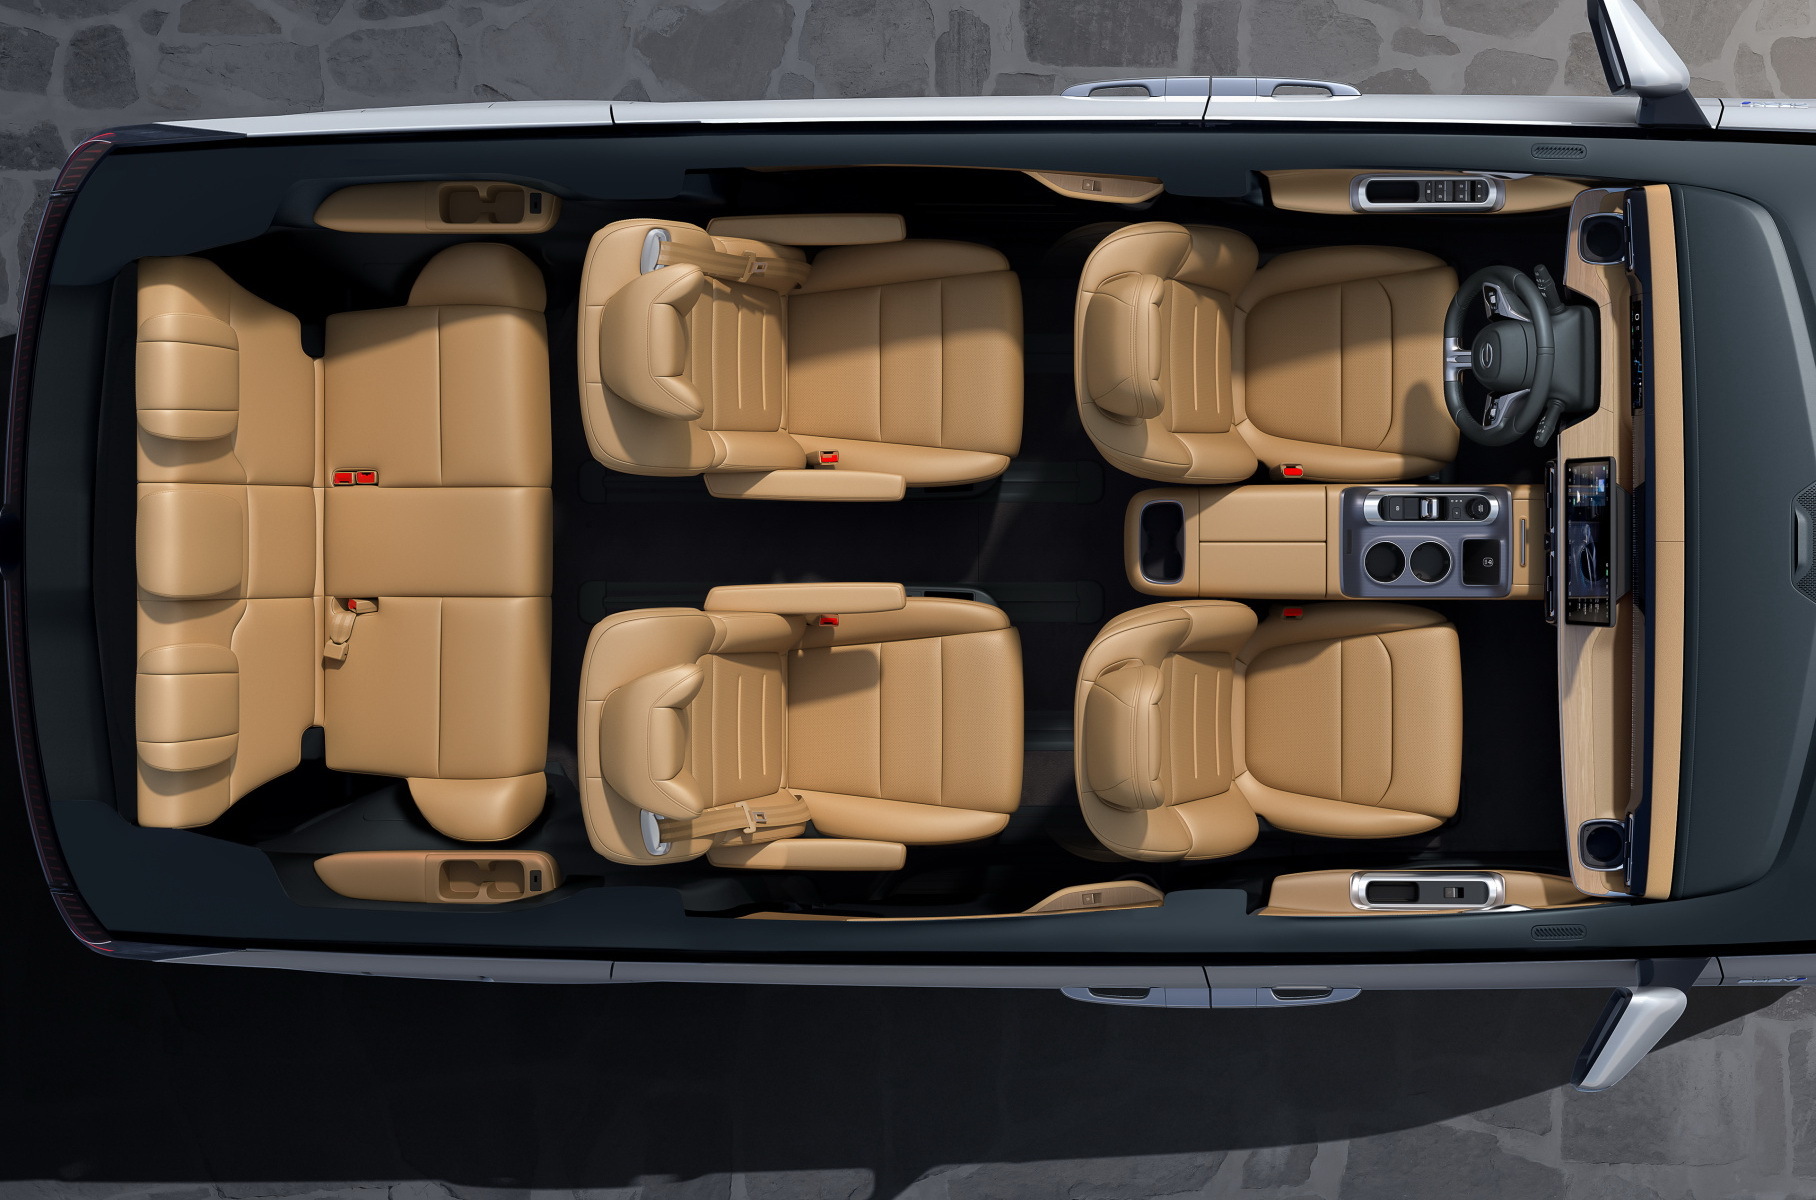 Stylish GAC minivan with convertible interior presented